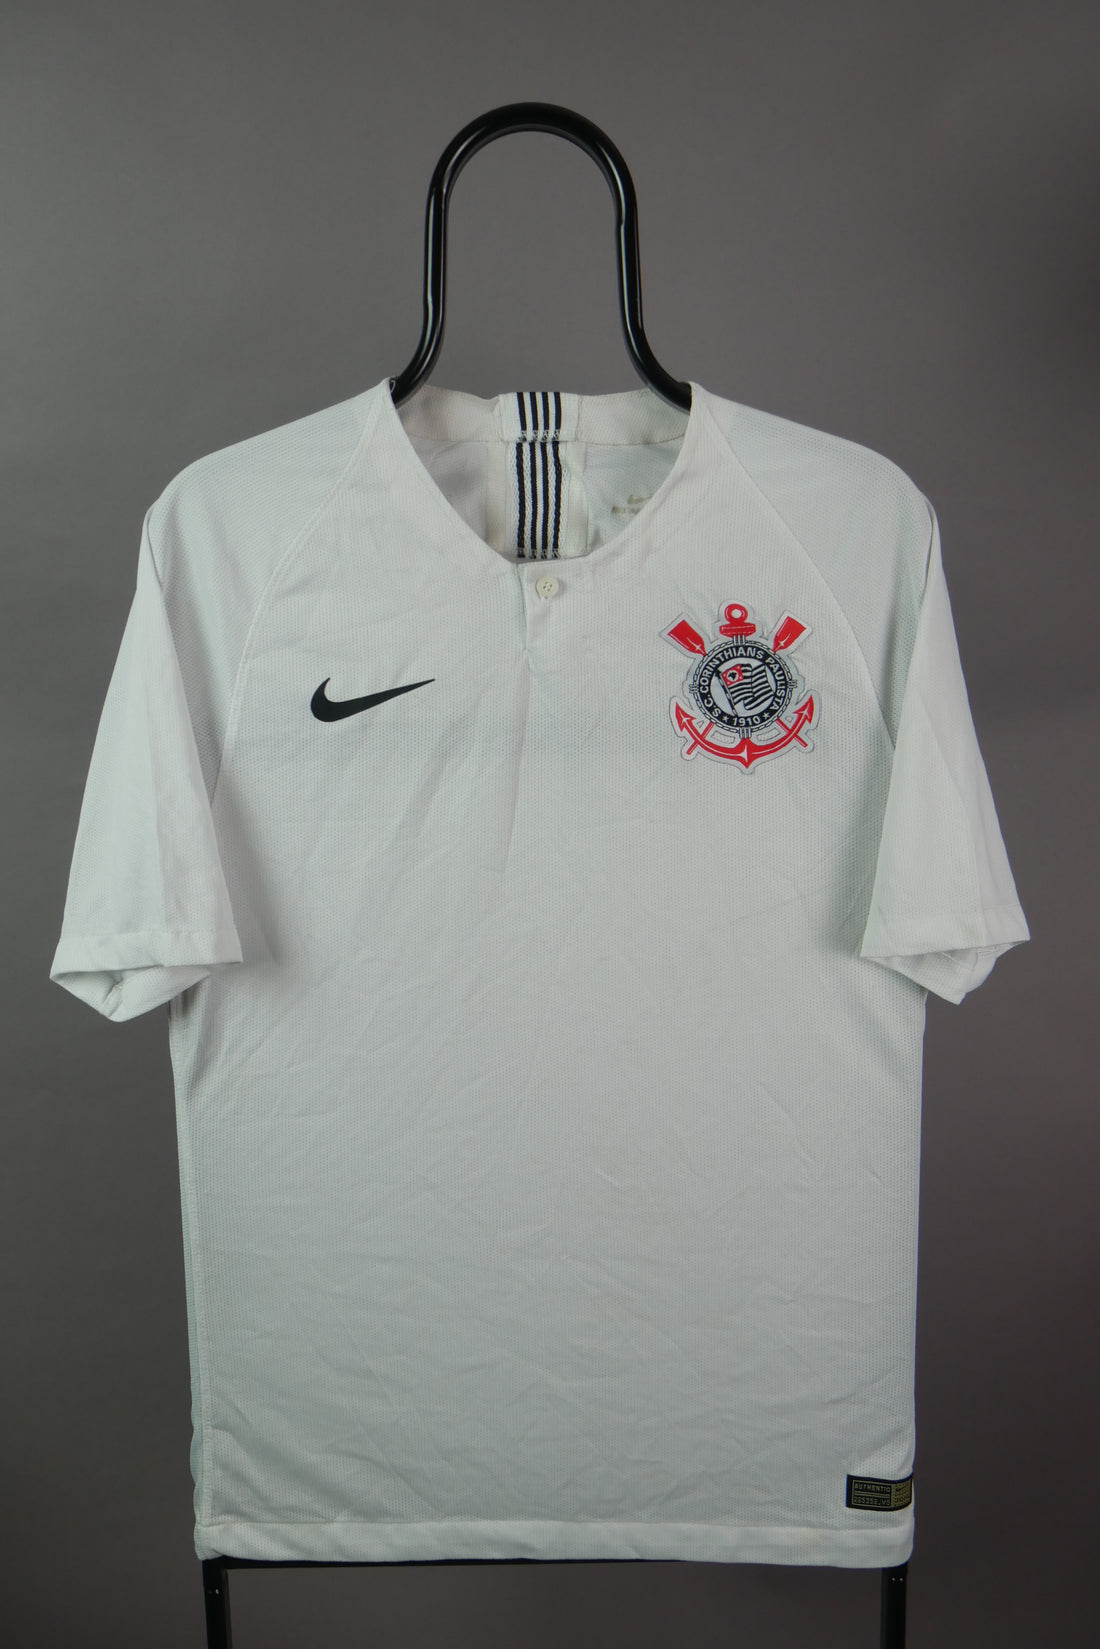 The Nike S C Corinthians Paulista Football T-Shirt (M)